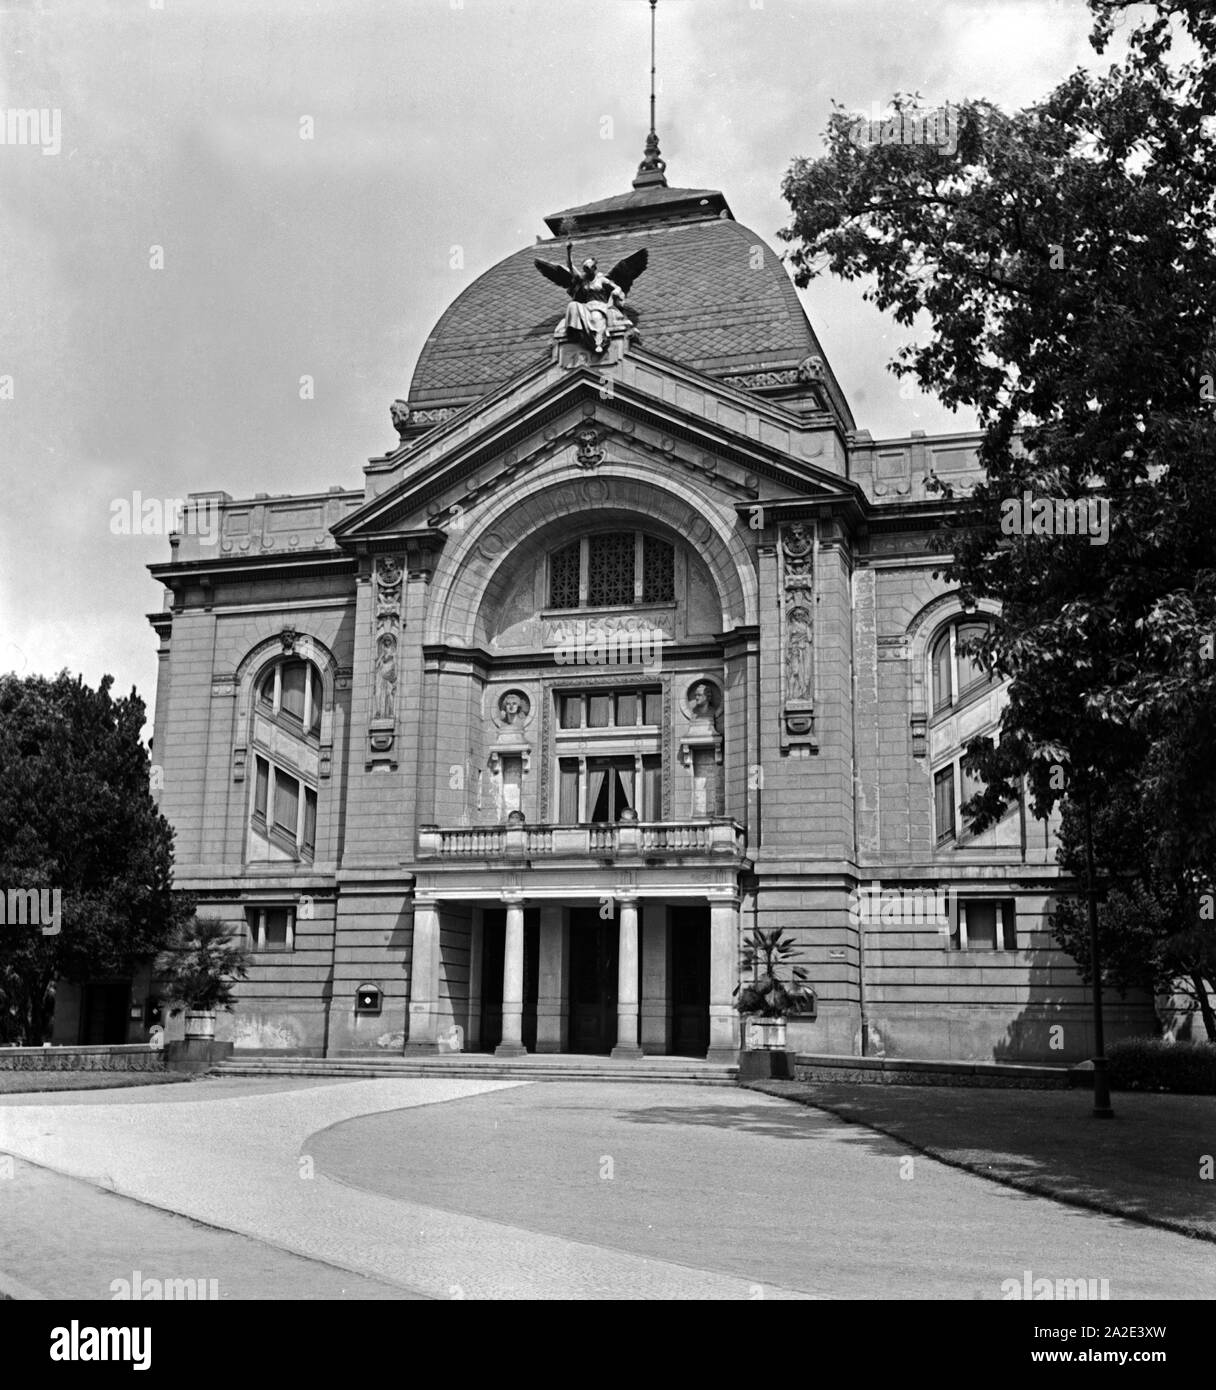 Teatro das en Gera, Großes Haus, Deutschland 1930er Jahre. Gera teatros (Grosses Haus), Alemania 1930. Foto de stock